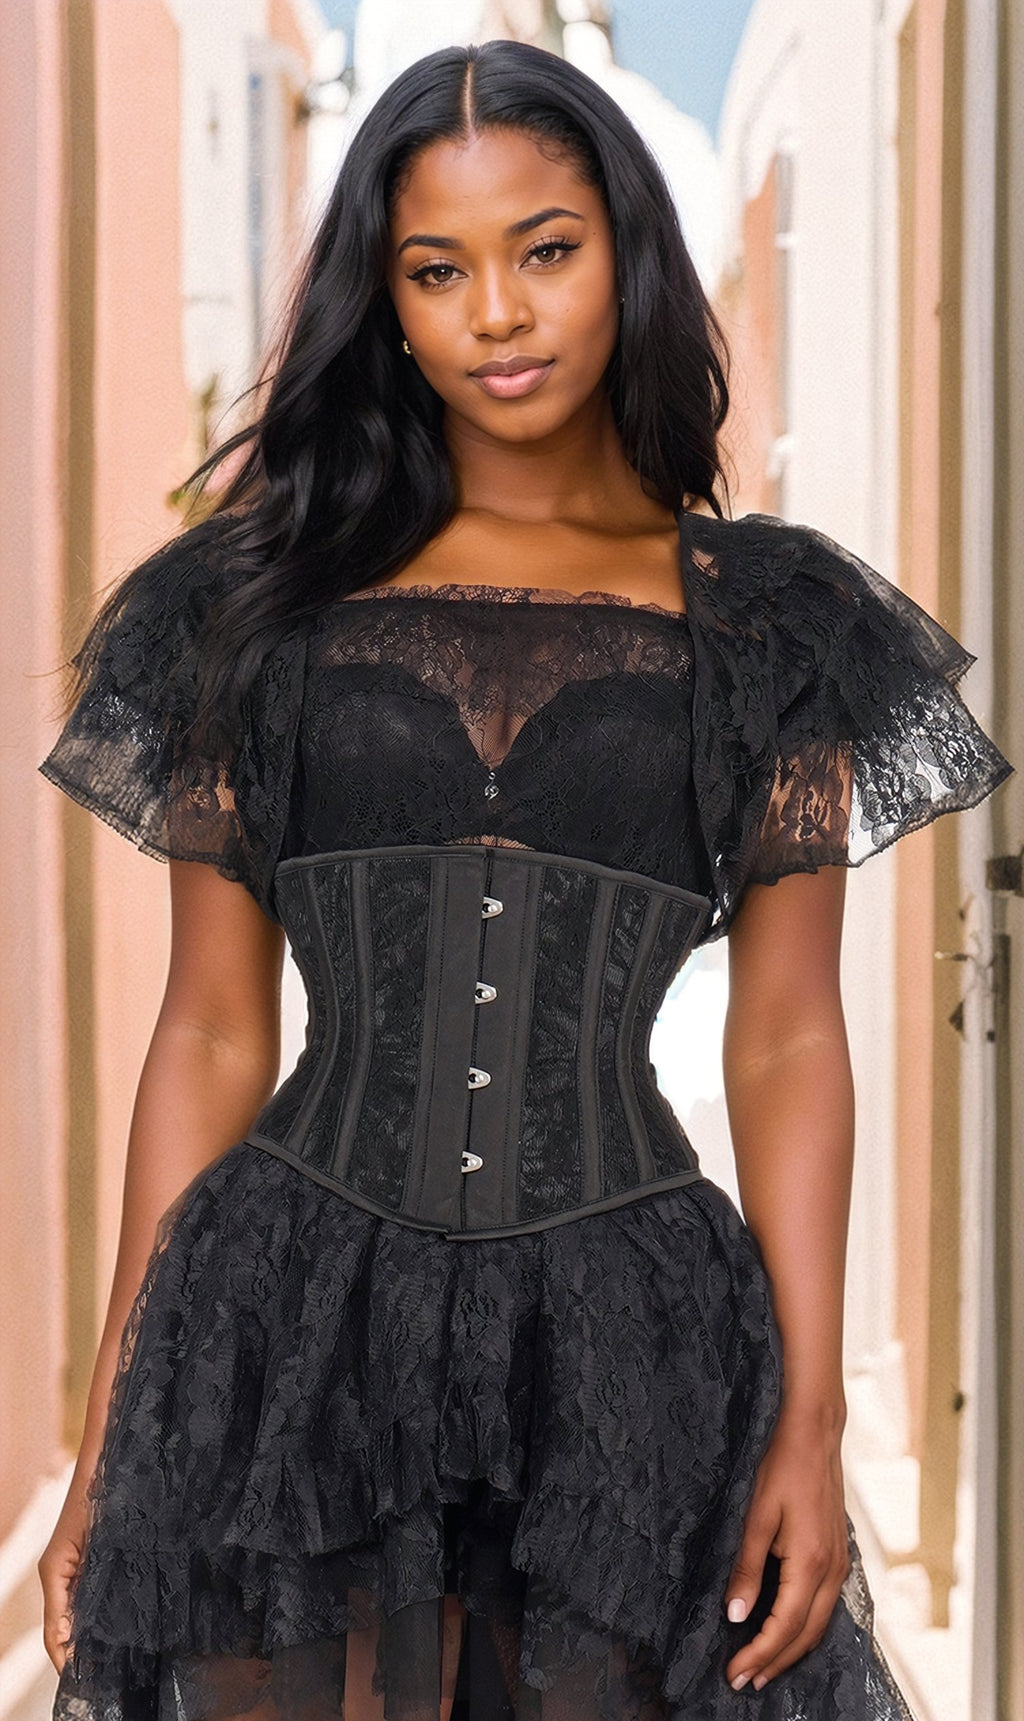 Shop beautiful, authentic steel boned corsets. We design the best